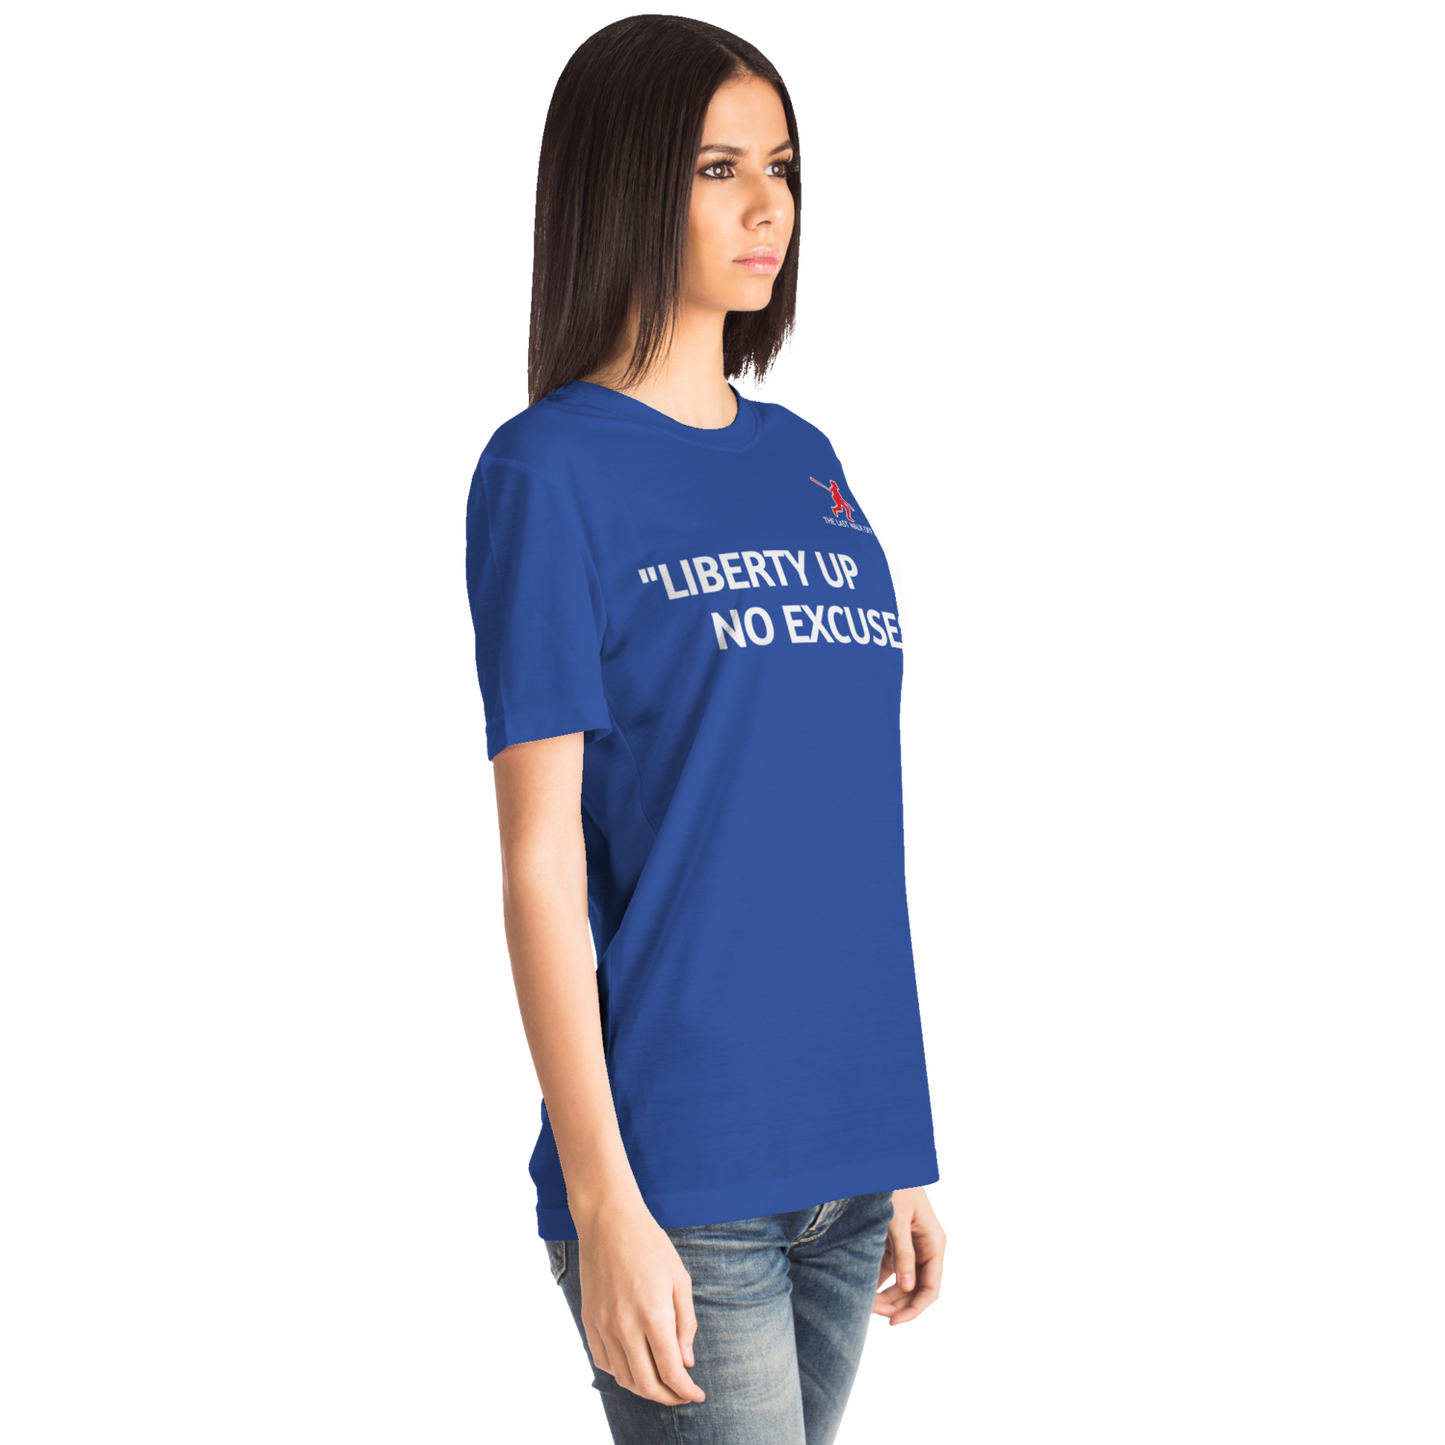 Philadelphia Blue T-Shirt Quote